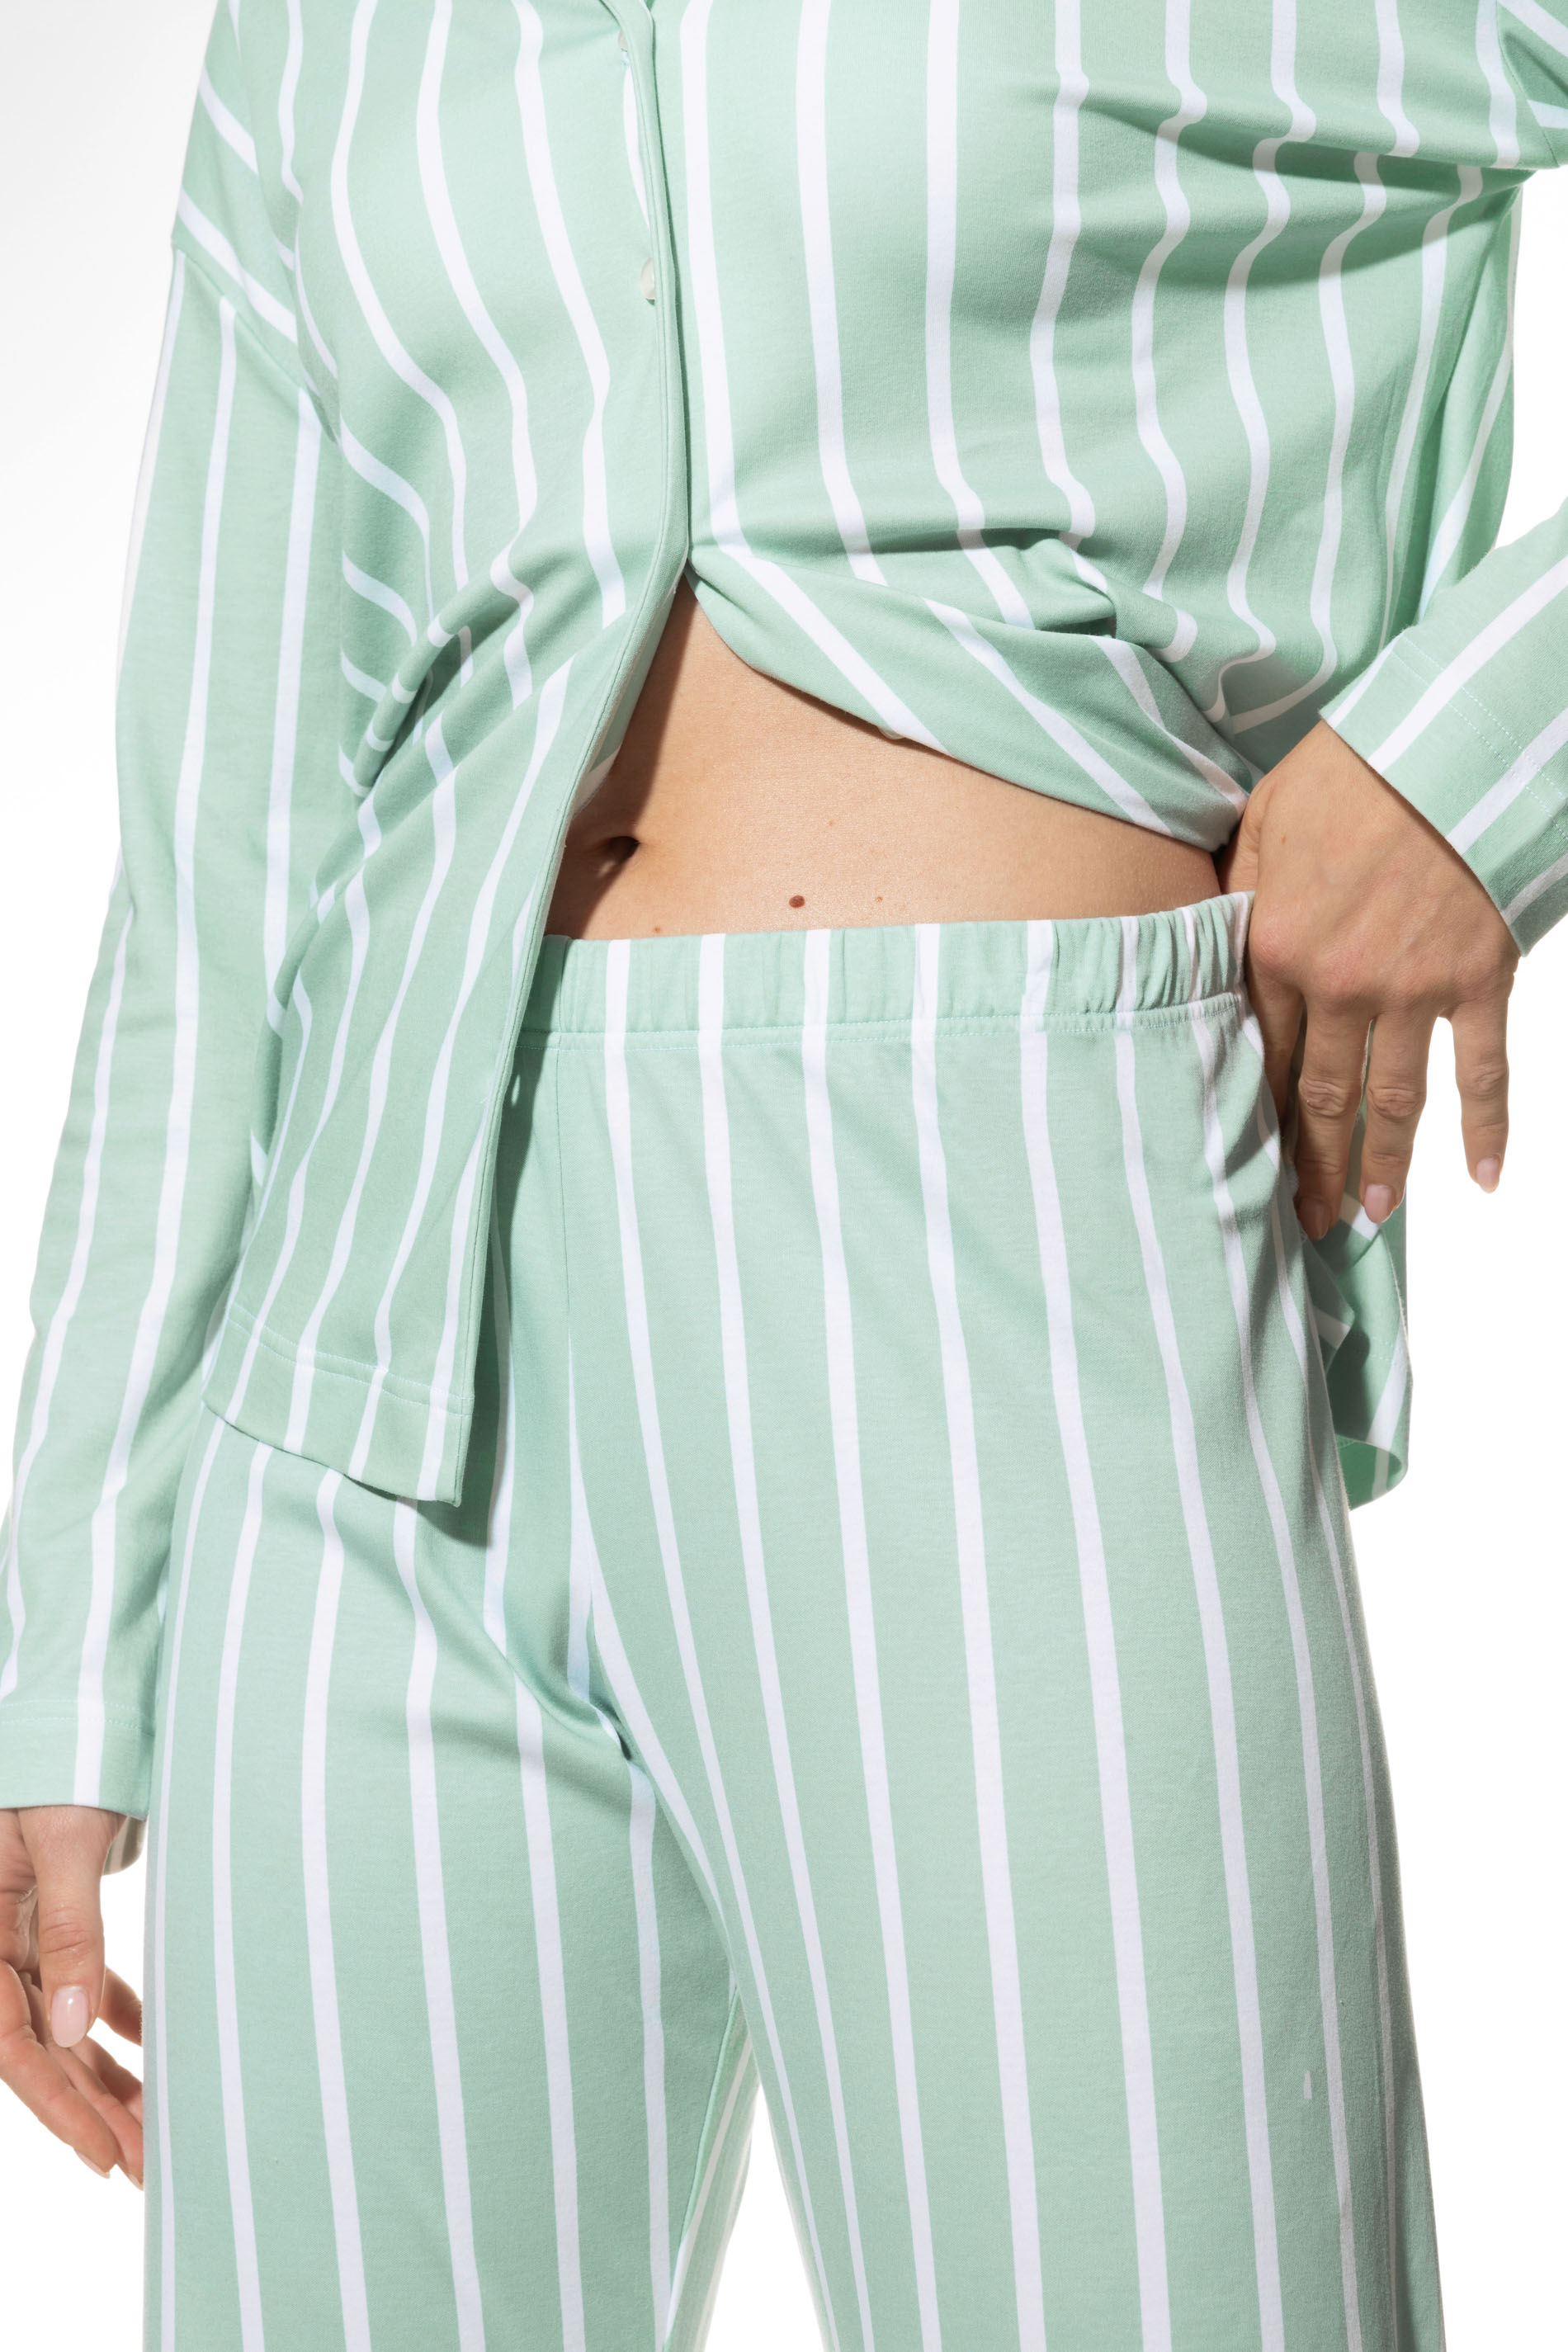 Schlafanzug lang Serie Elva Detailansicht 02 | mey®